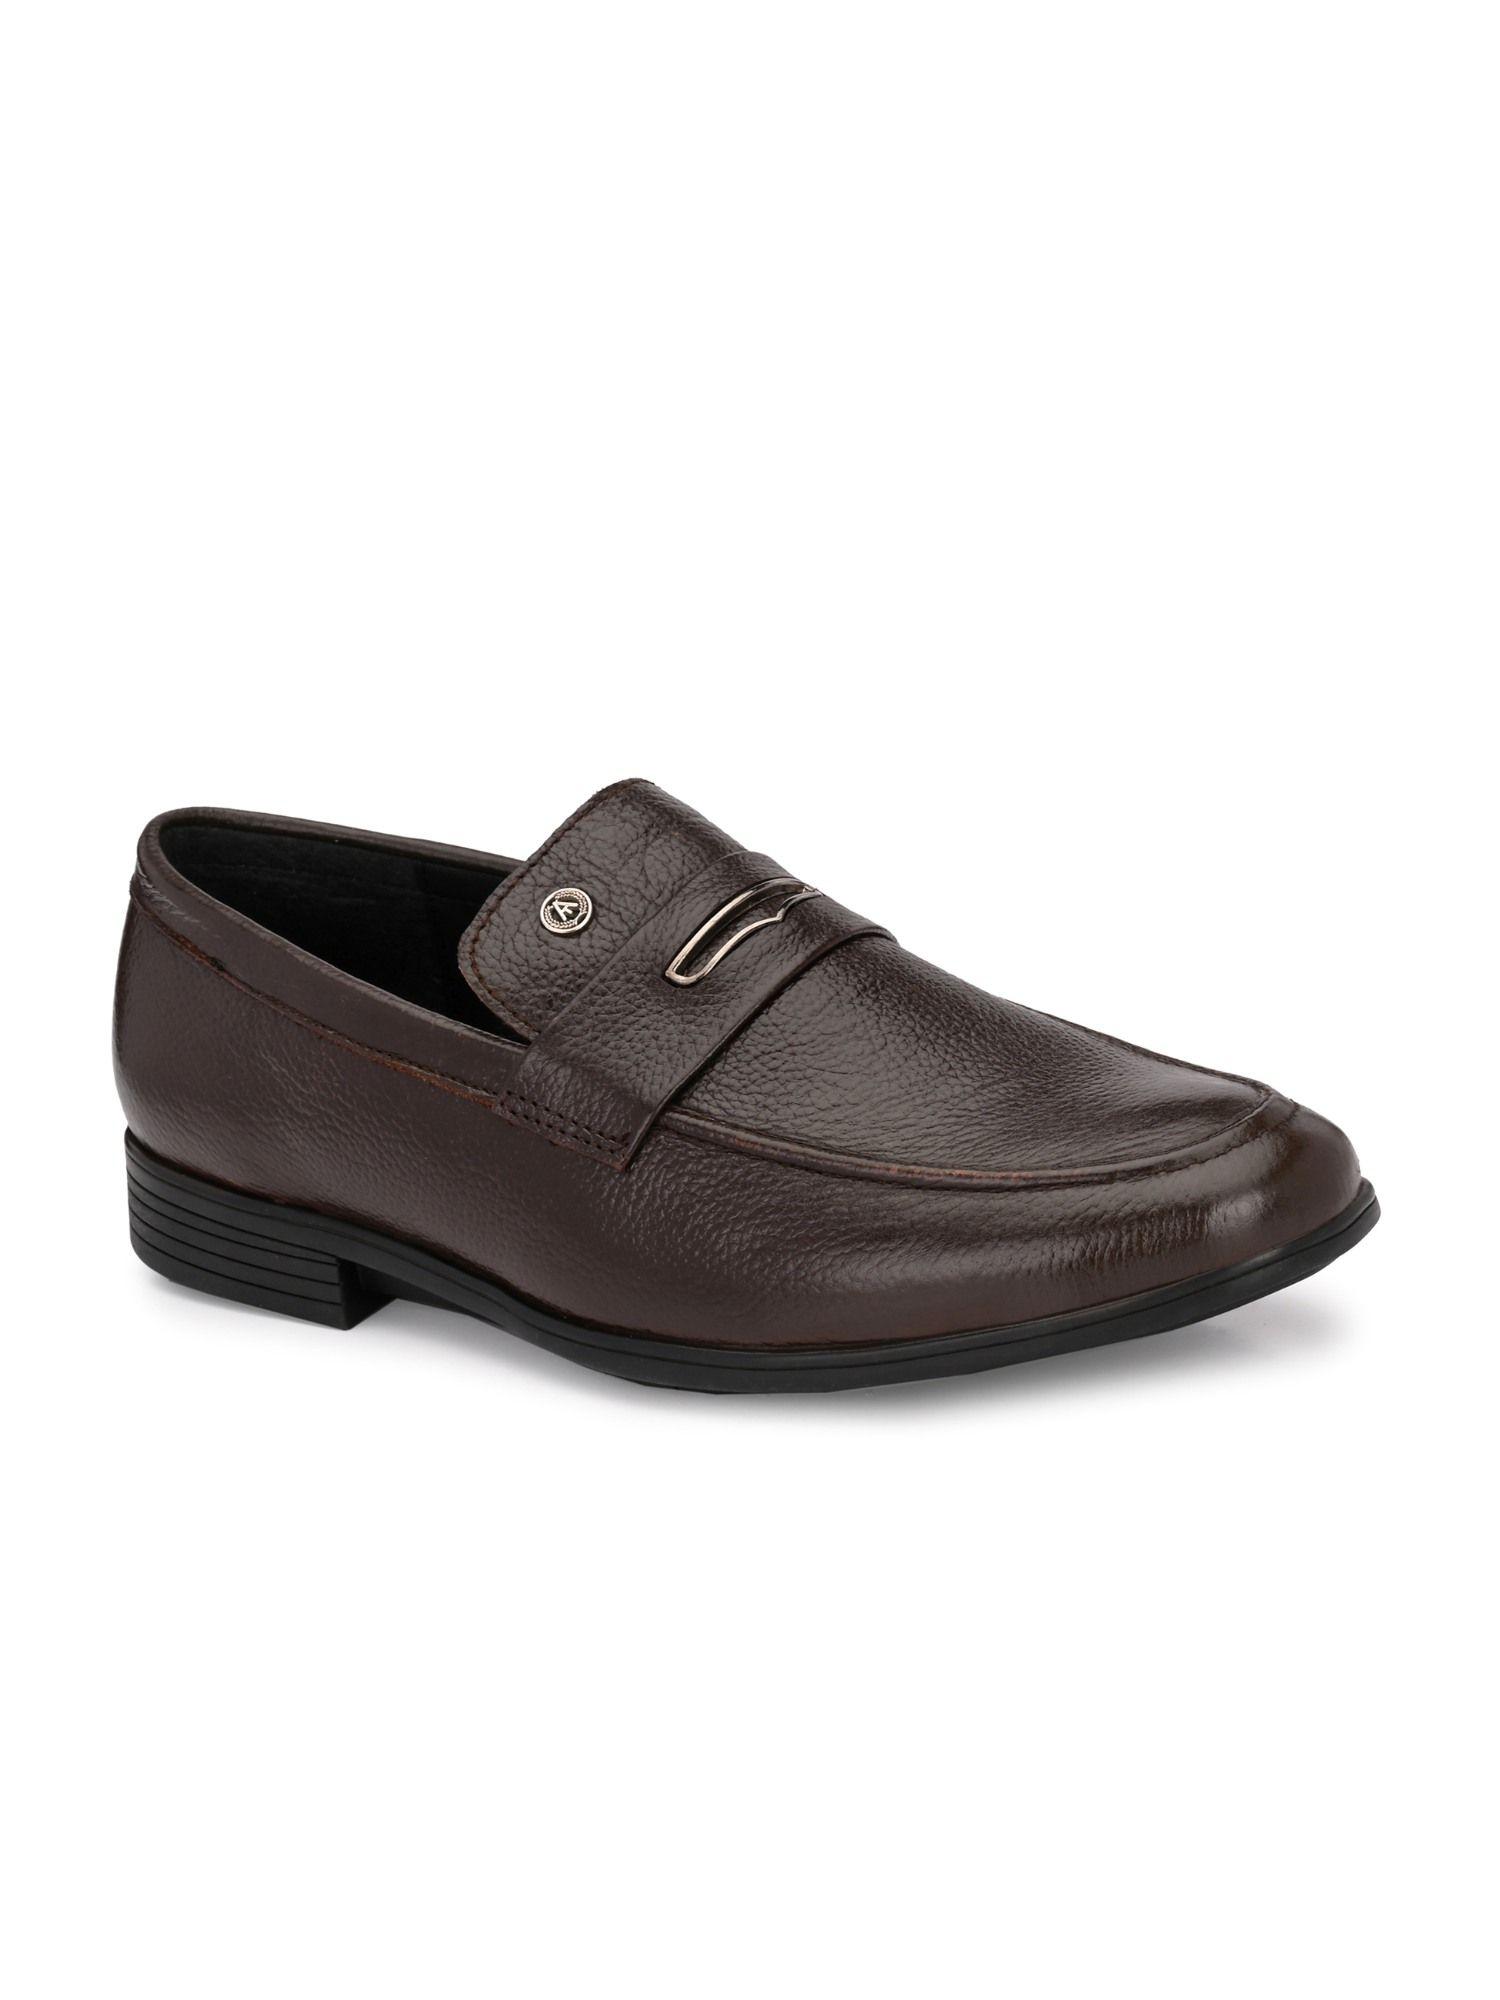 solid genuine leather brown slip on formal shoes for men